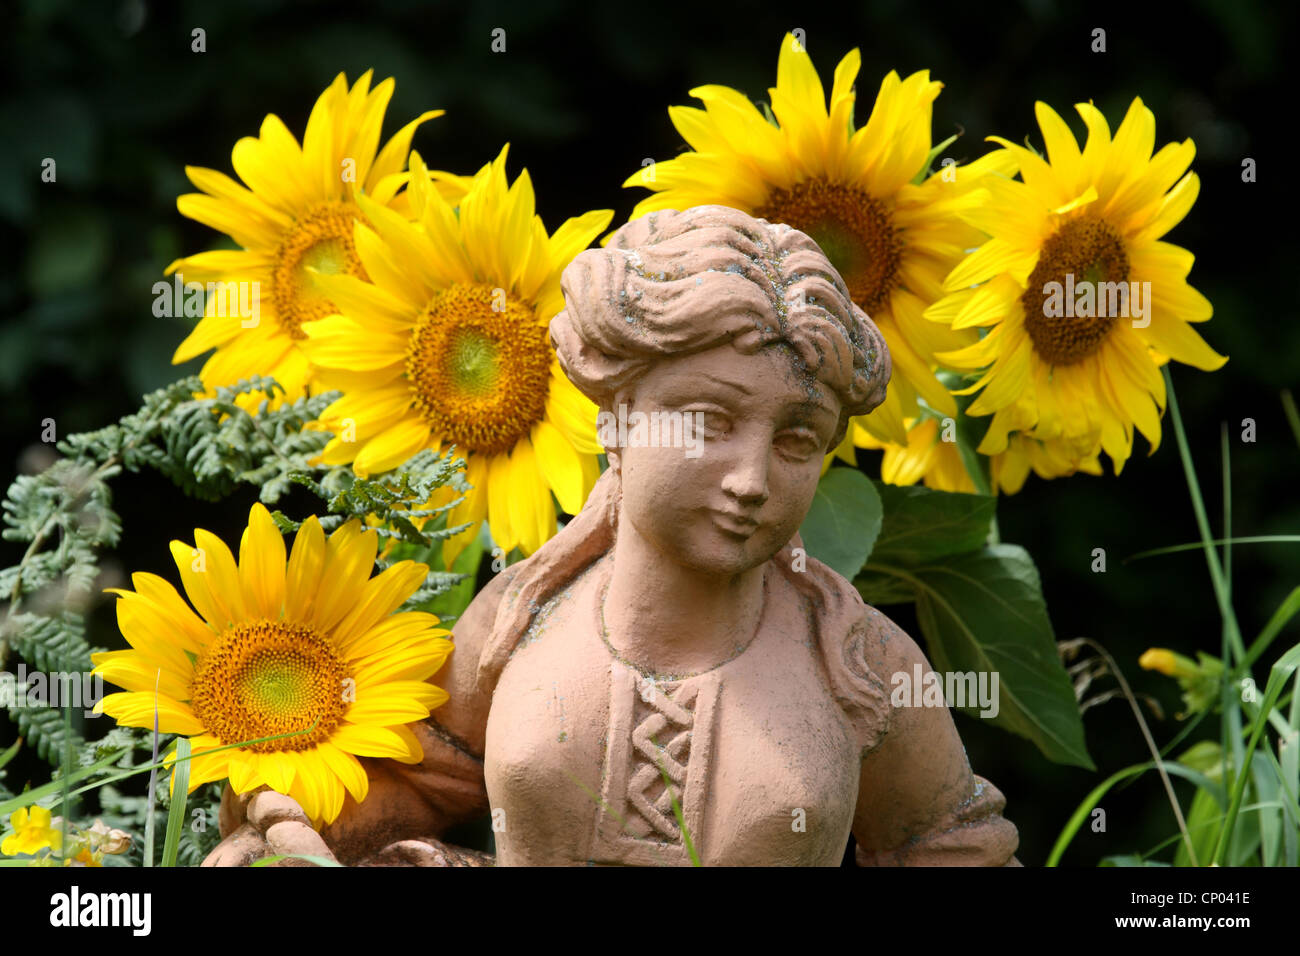 common sunflower (Helianthus annuus), garden figur with sunflowers, Germany Stock Photo